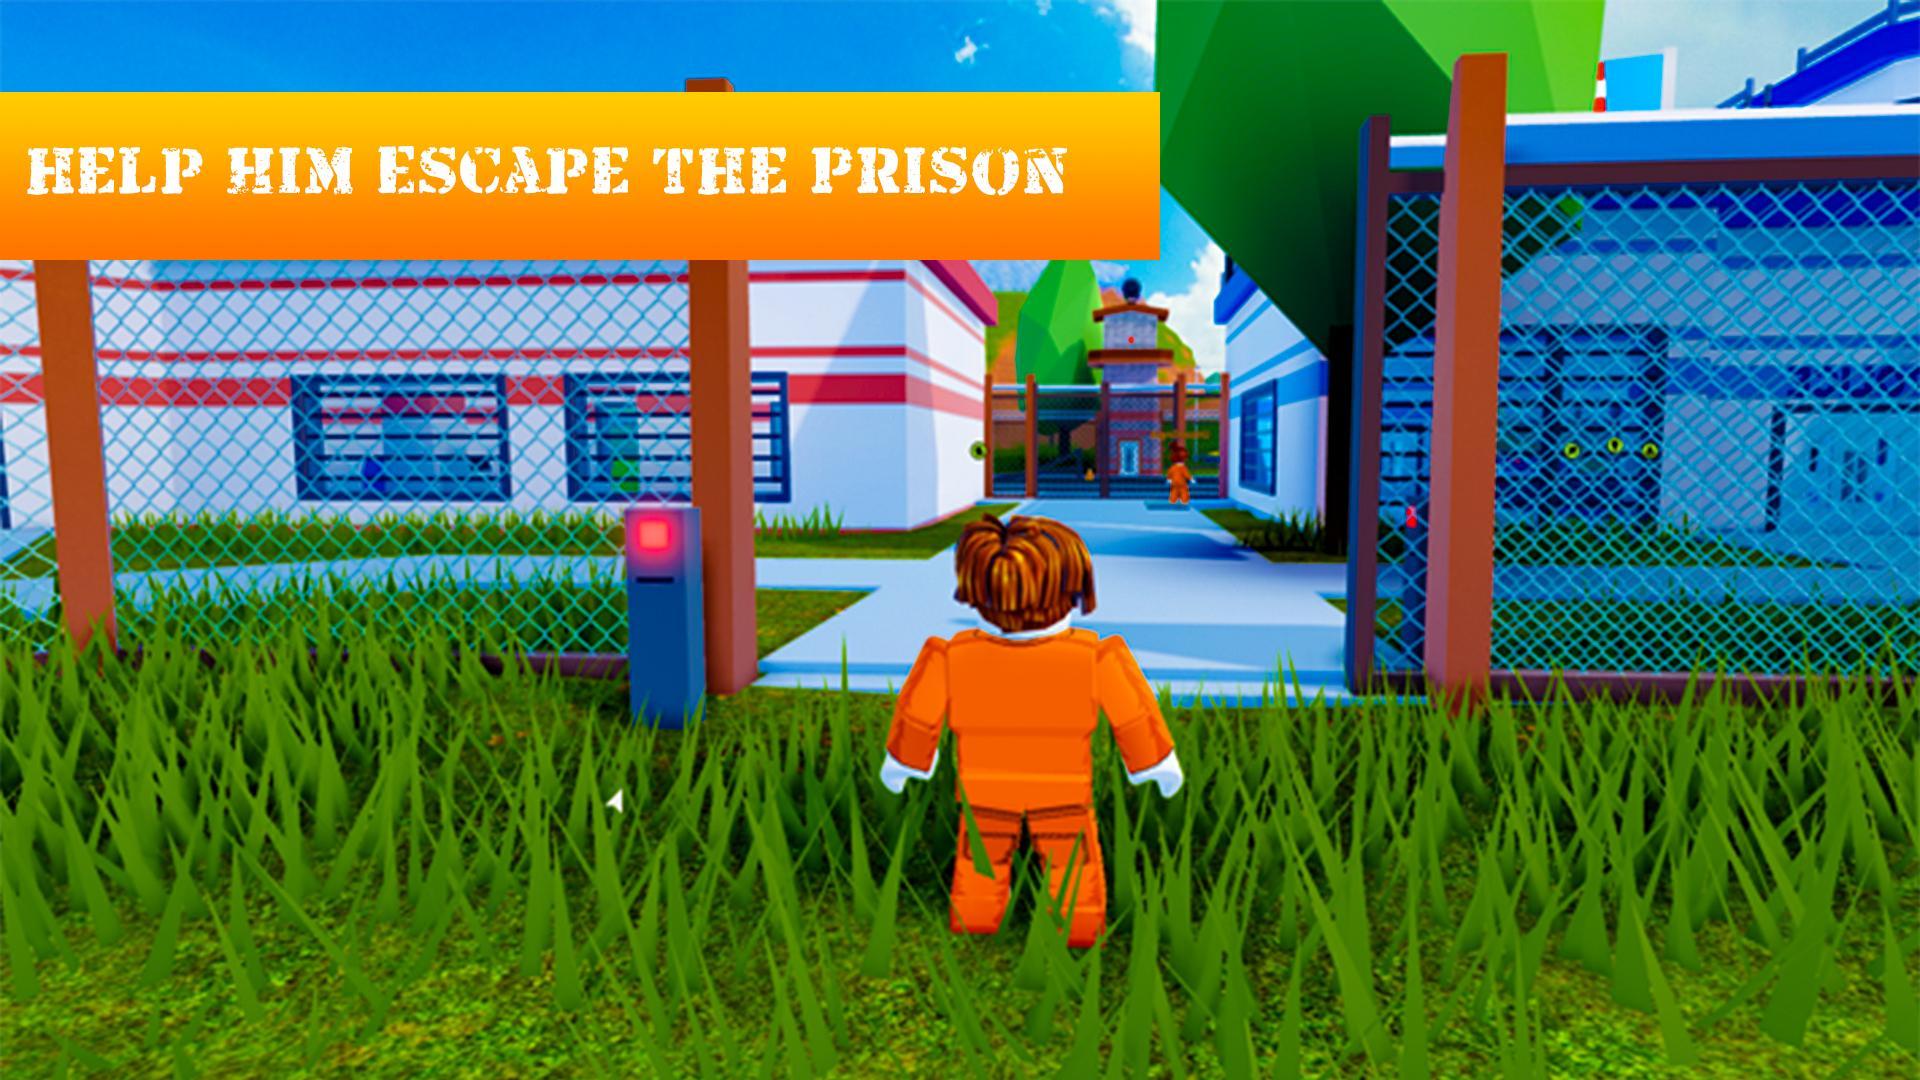 Jailbreak Prison Escape Survival Rublox Runner Mod For Android Apk Download - roblox jailbreak prison 2020